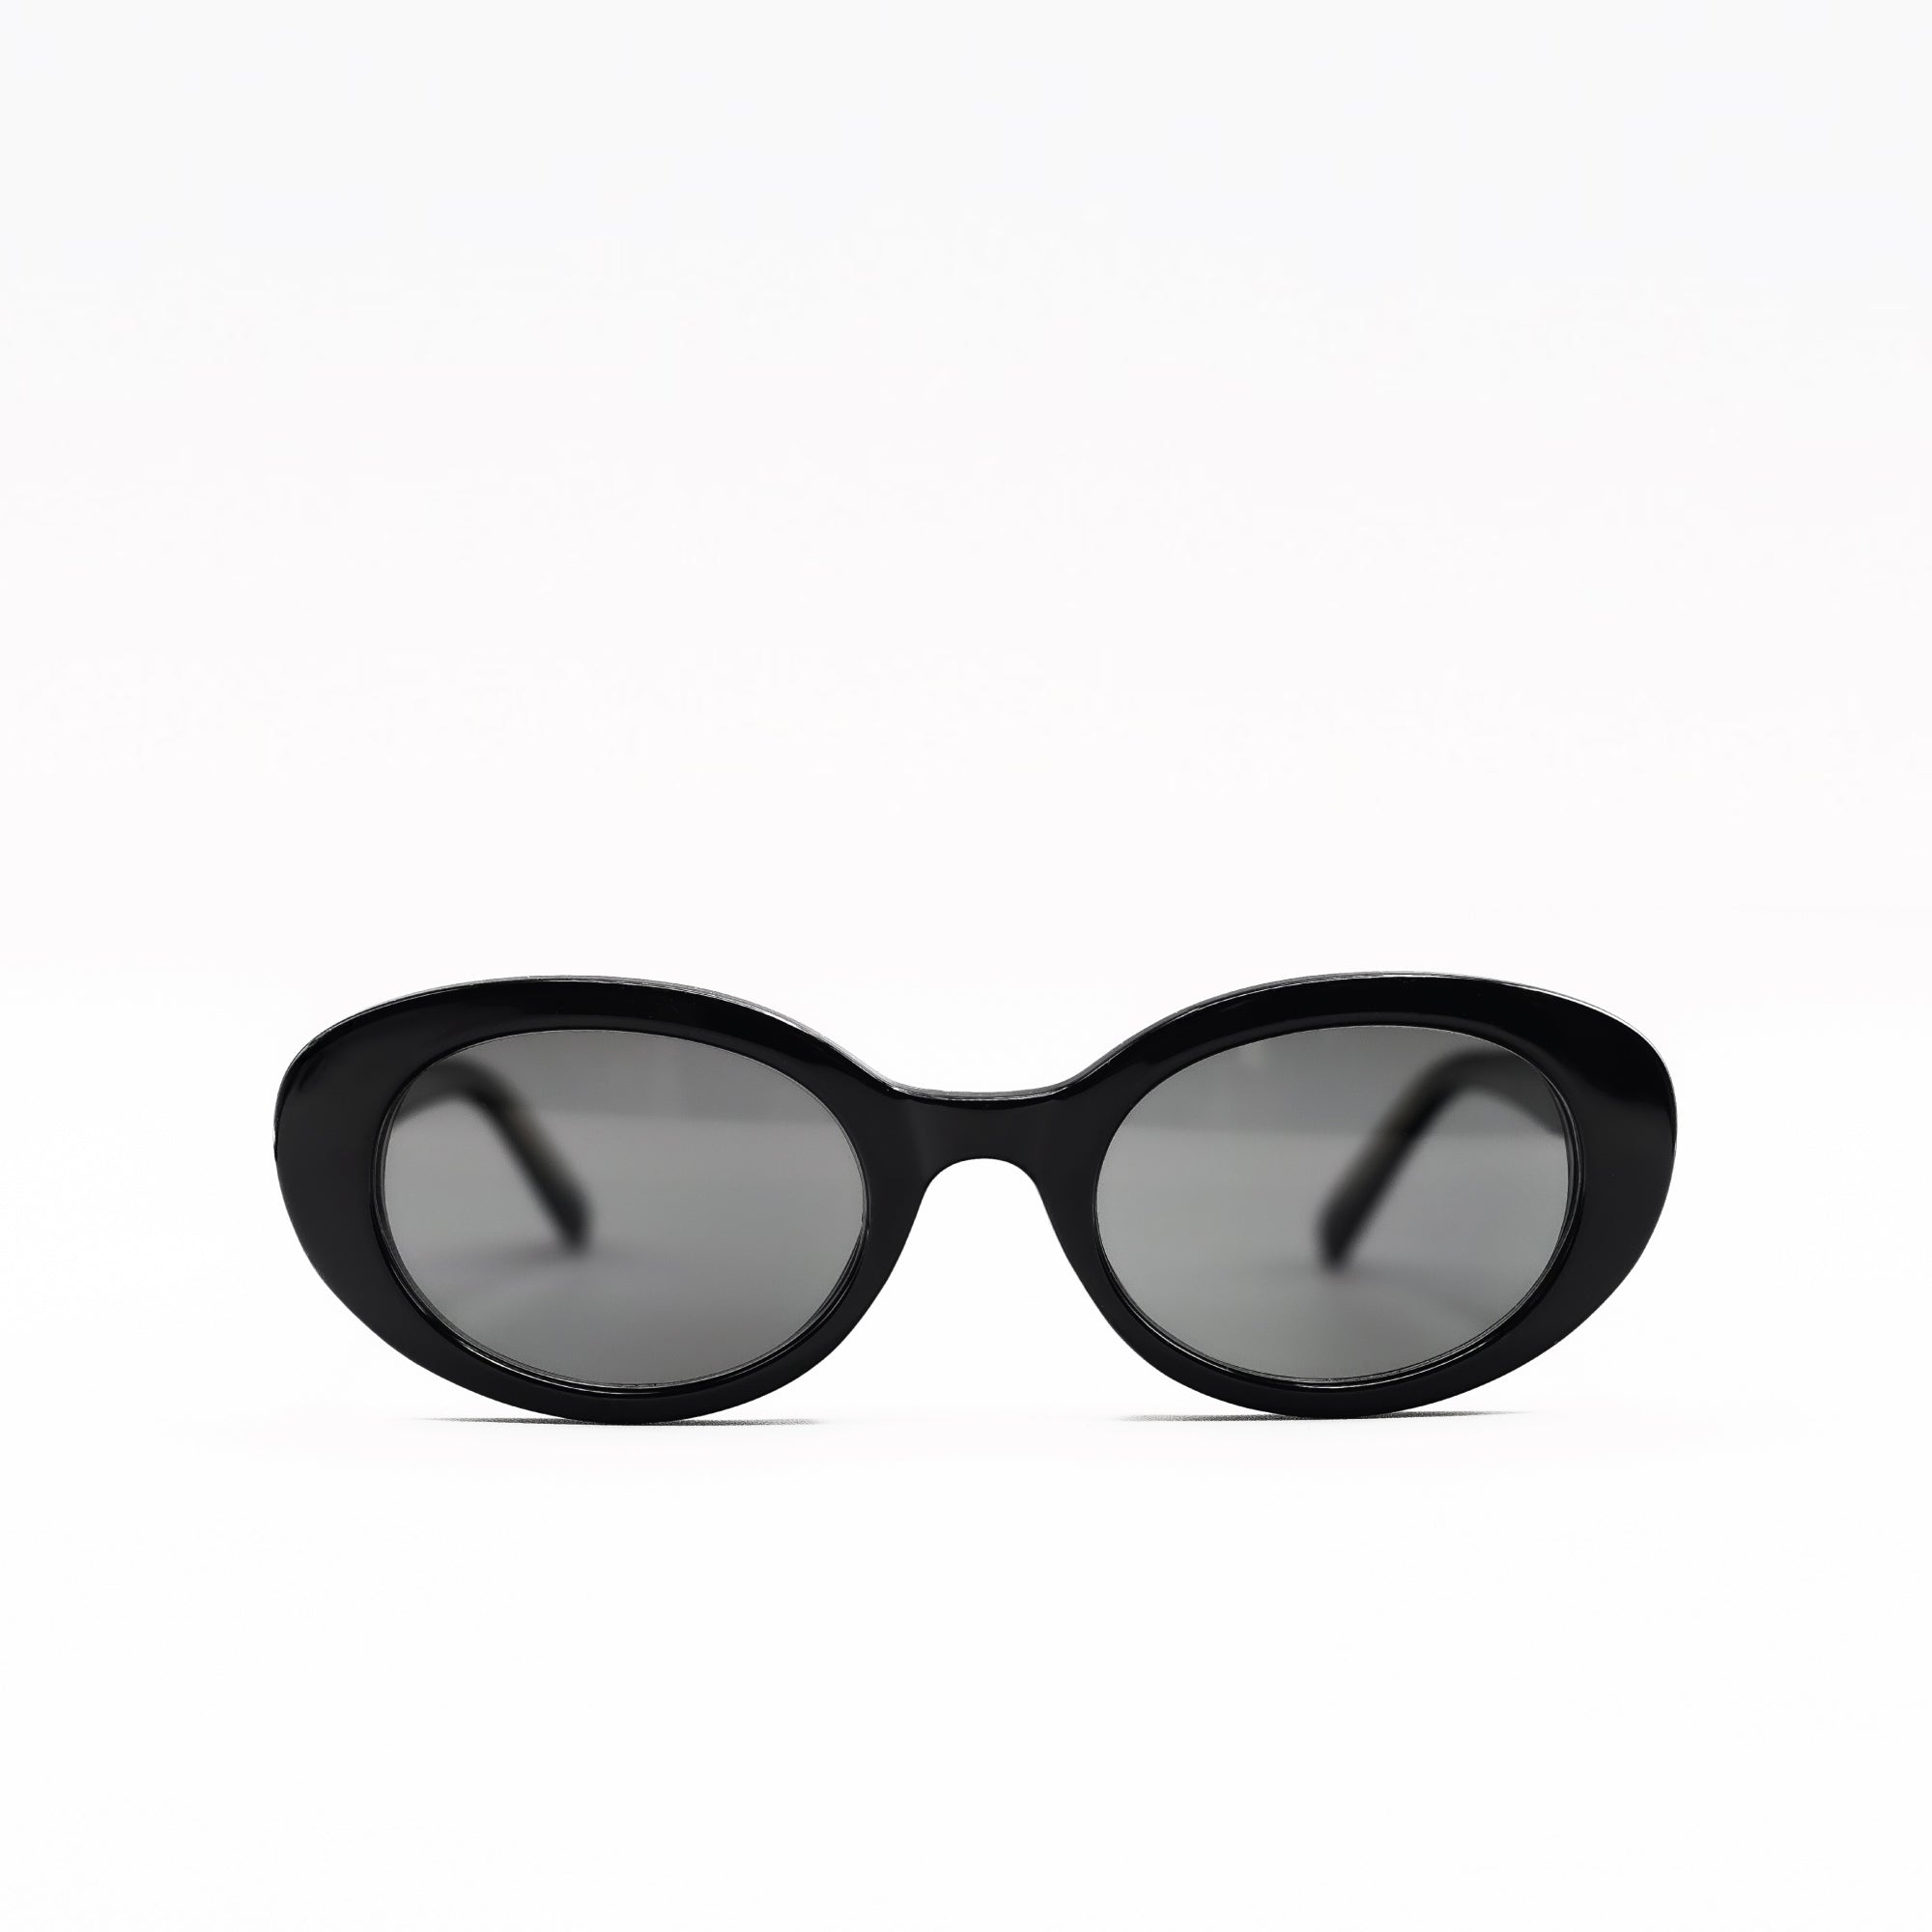 Black Round Eye Sunglasses